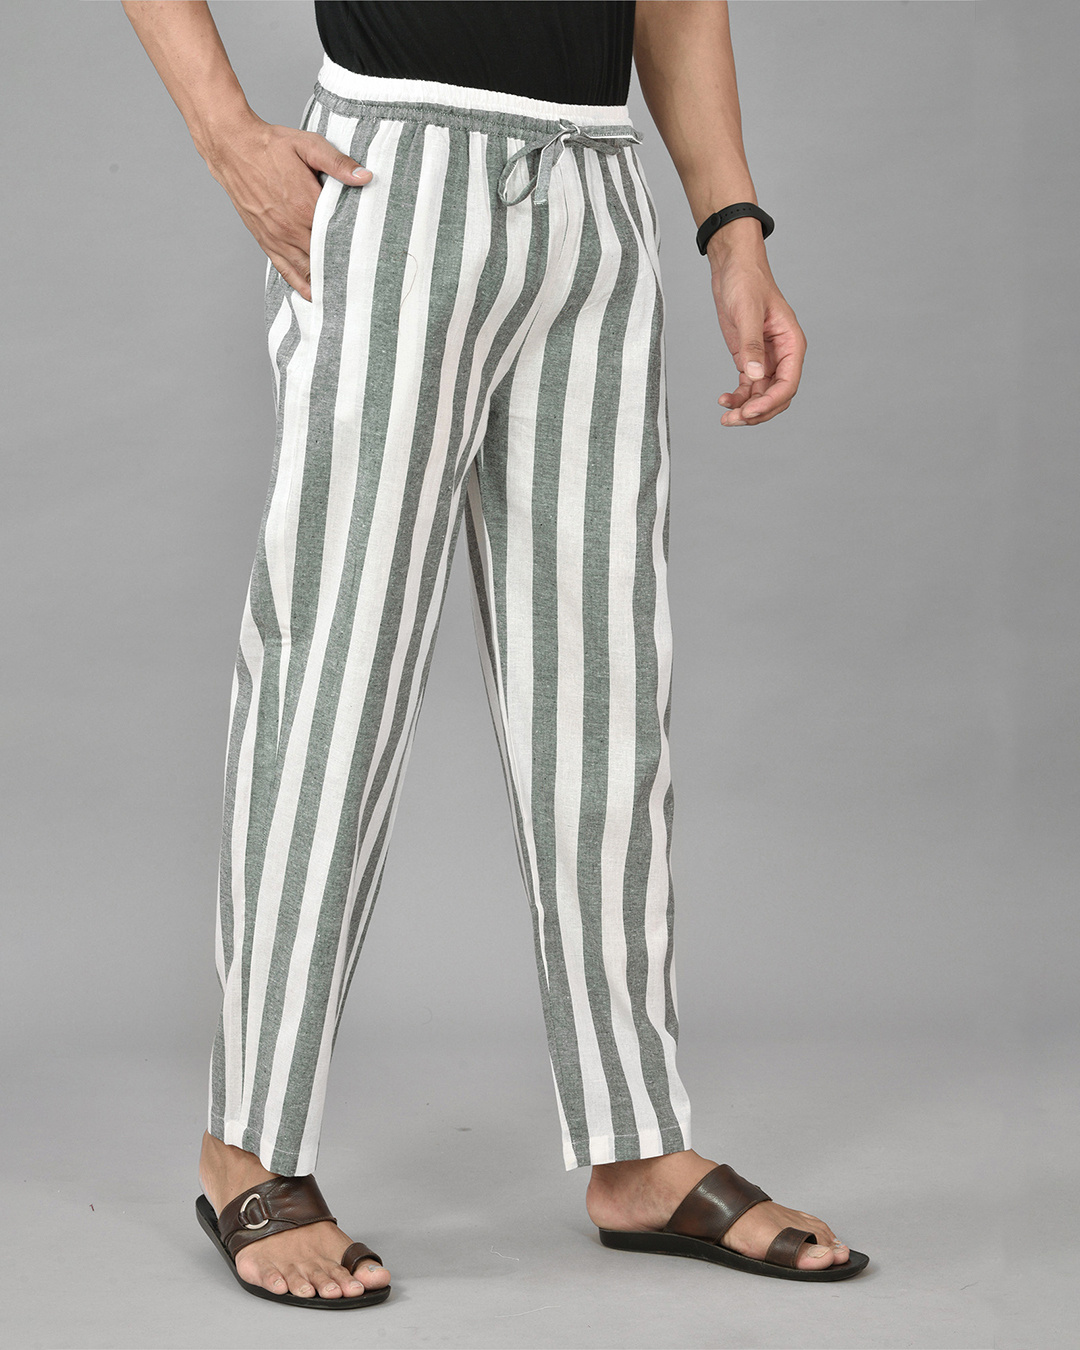 Mens Striped Trousers Pants Black White Summer Thin Ankle length Casual  Pants Male Breathable Fashion Slim Fit Harem Pants Men  AliExpress